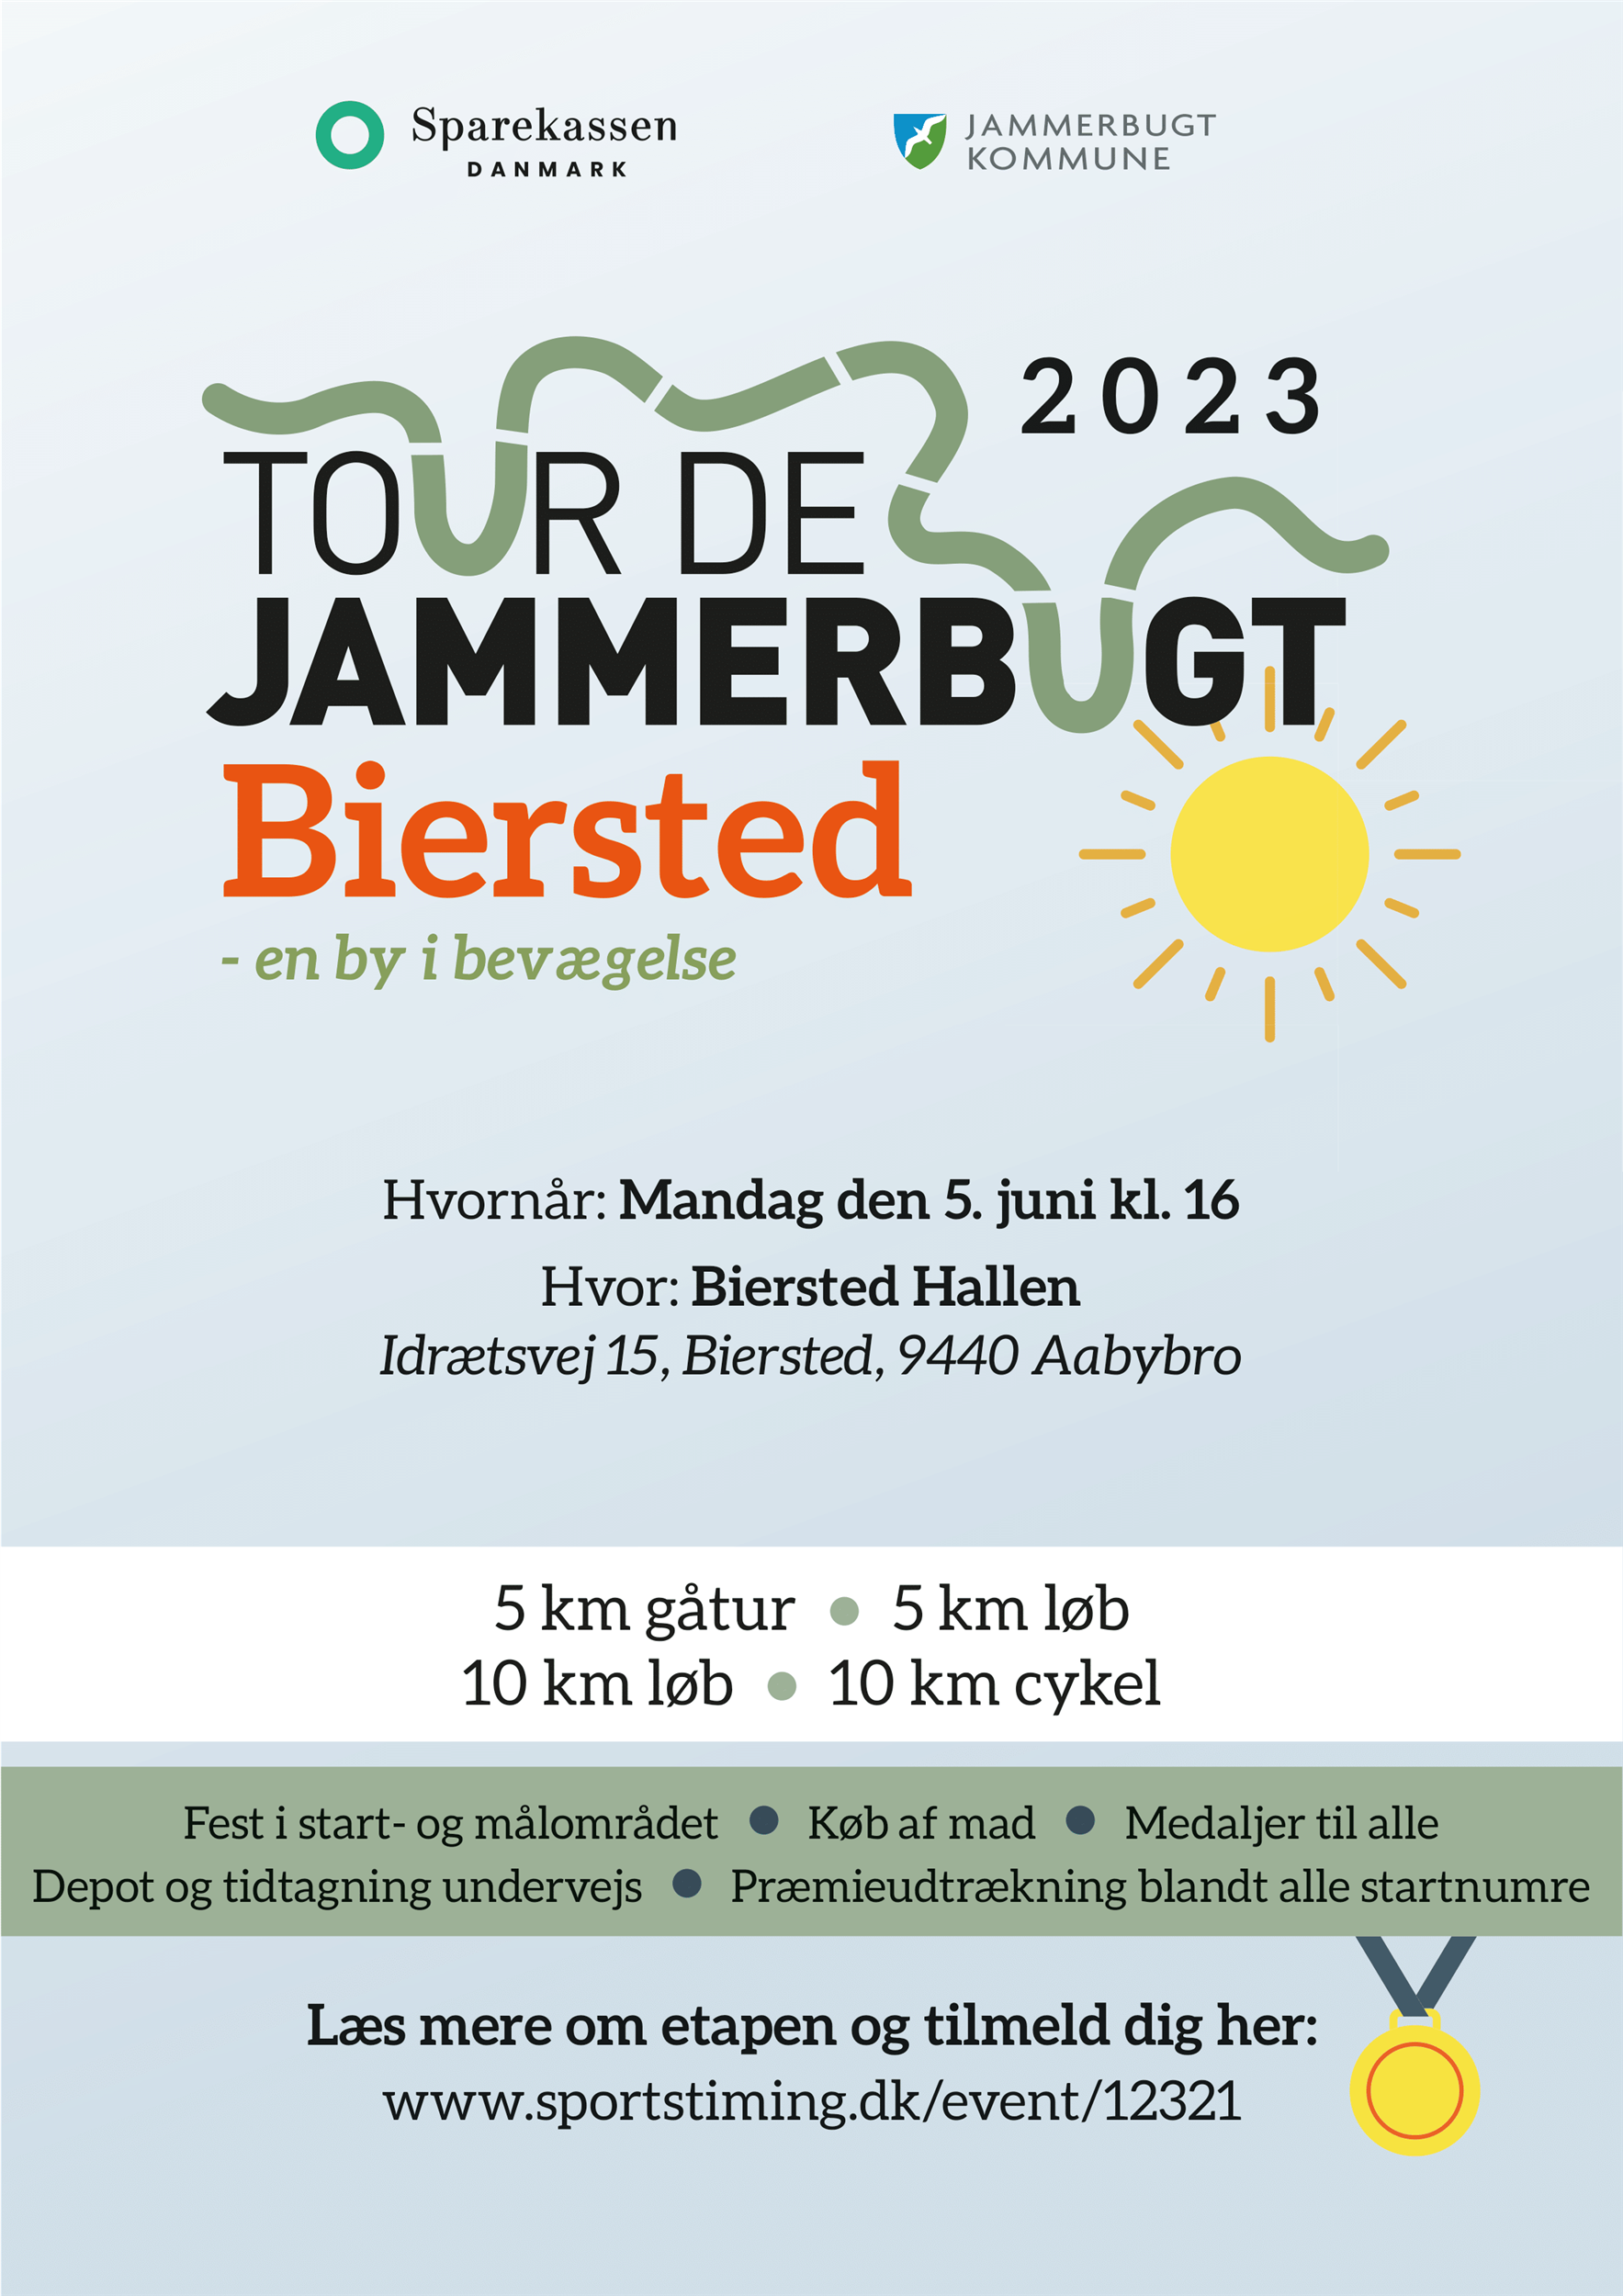 Tour de Jammerbugt - Biersted